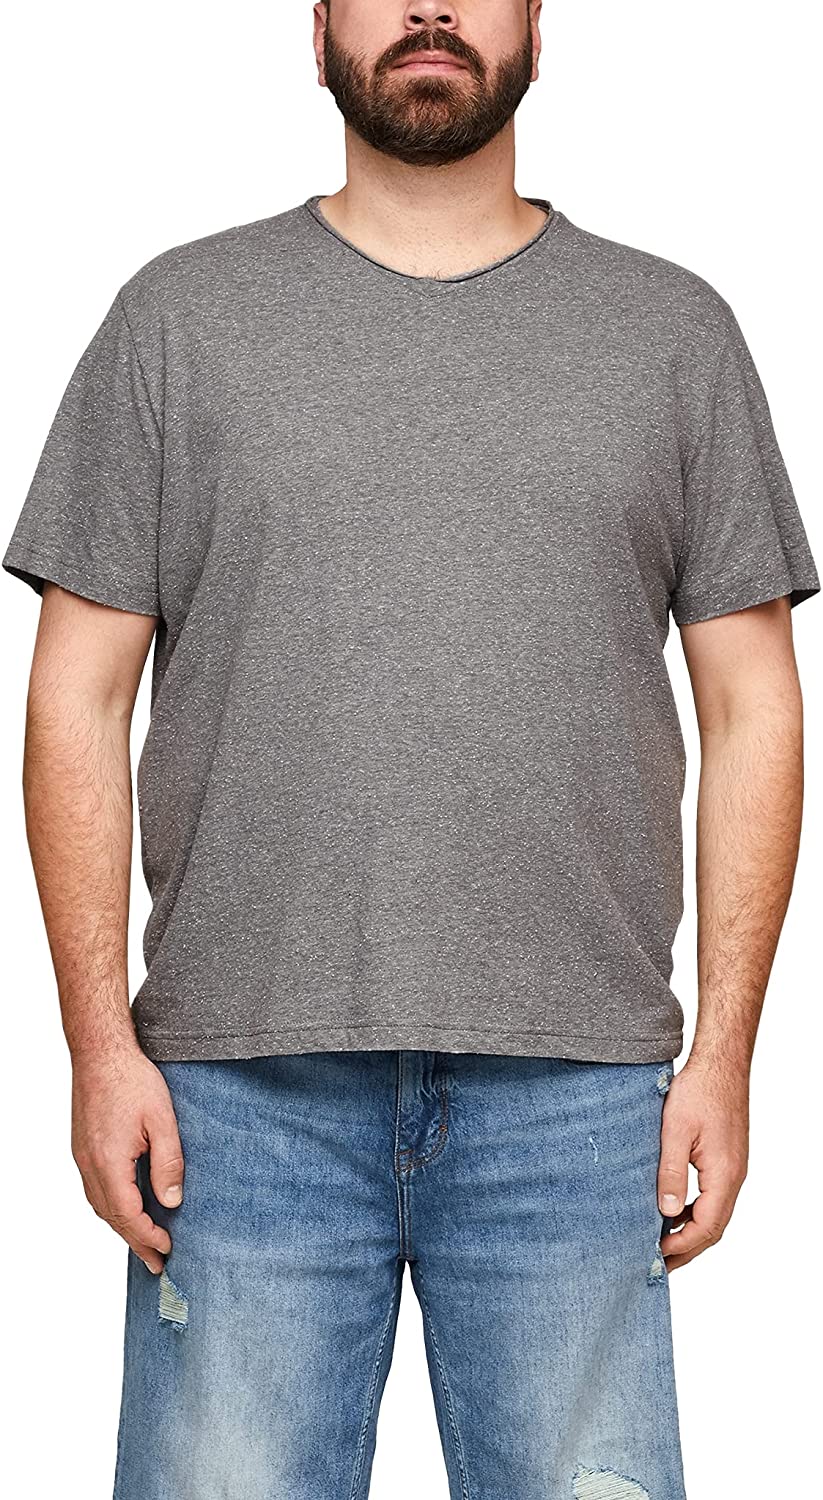 S.oliver Big Size Herren T-Shirt